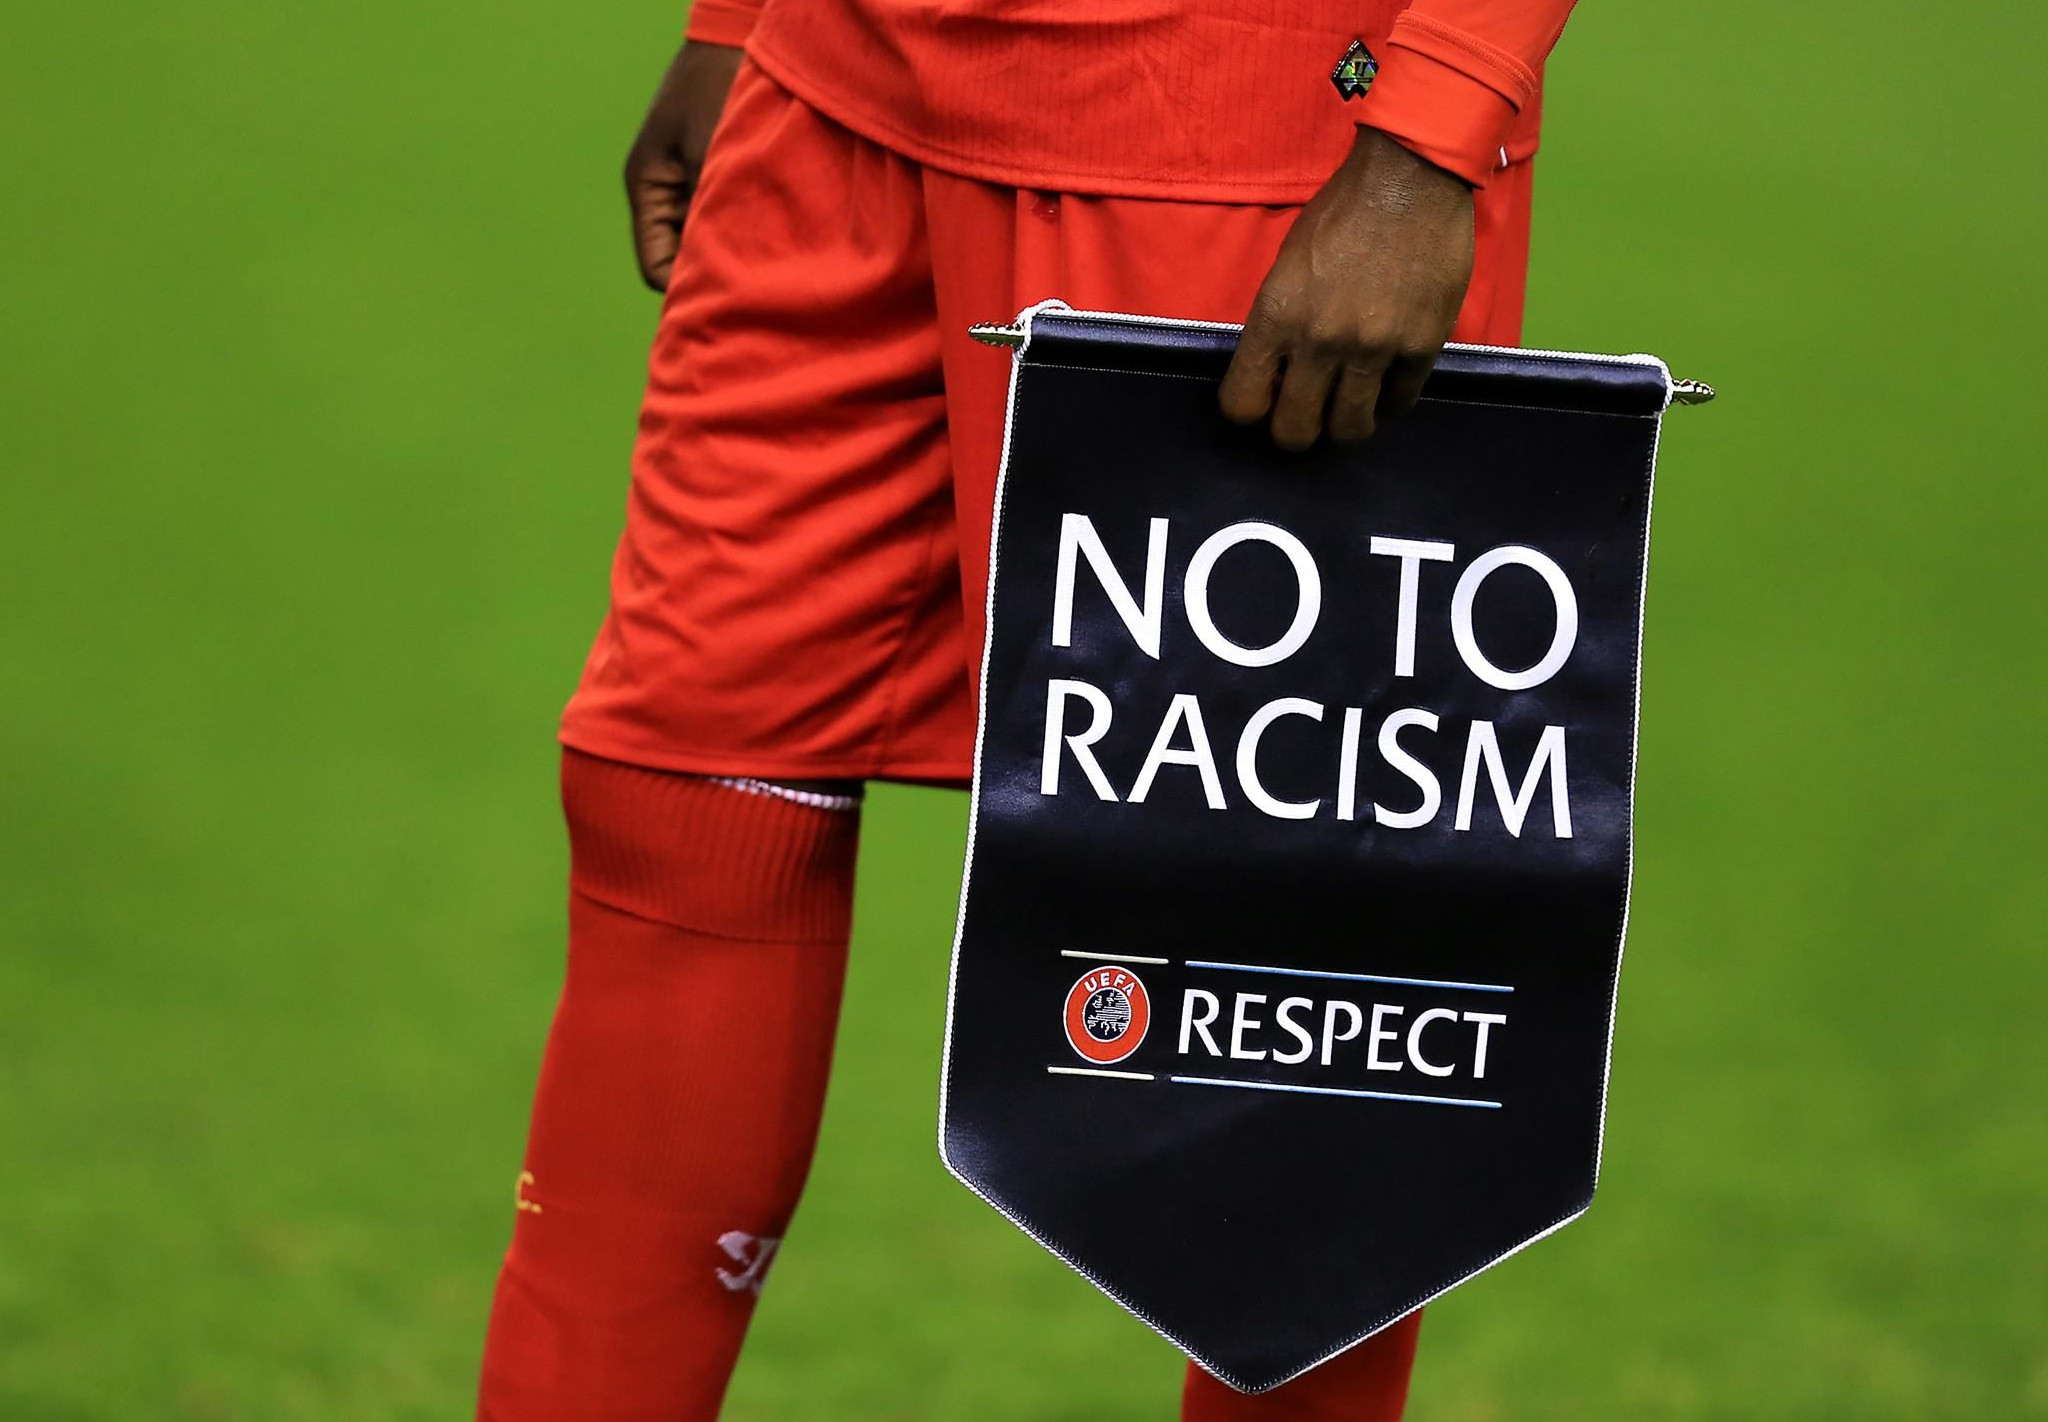 FIFA cria Plano global sobre racismo e medida eficaz contra o preconceito